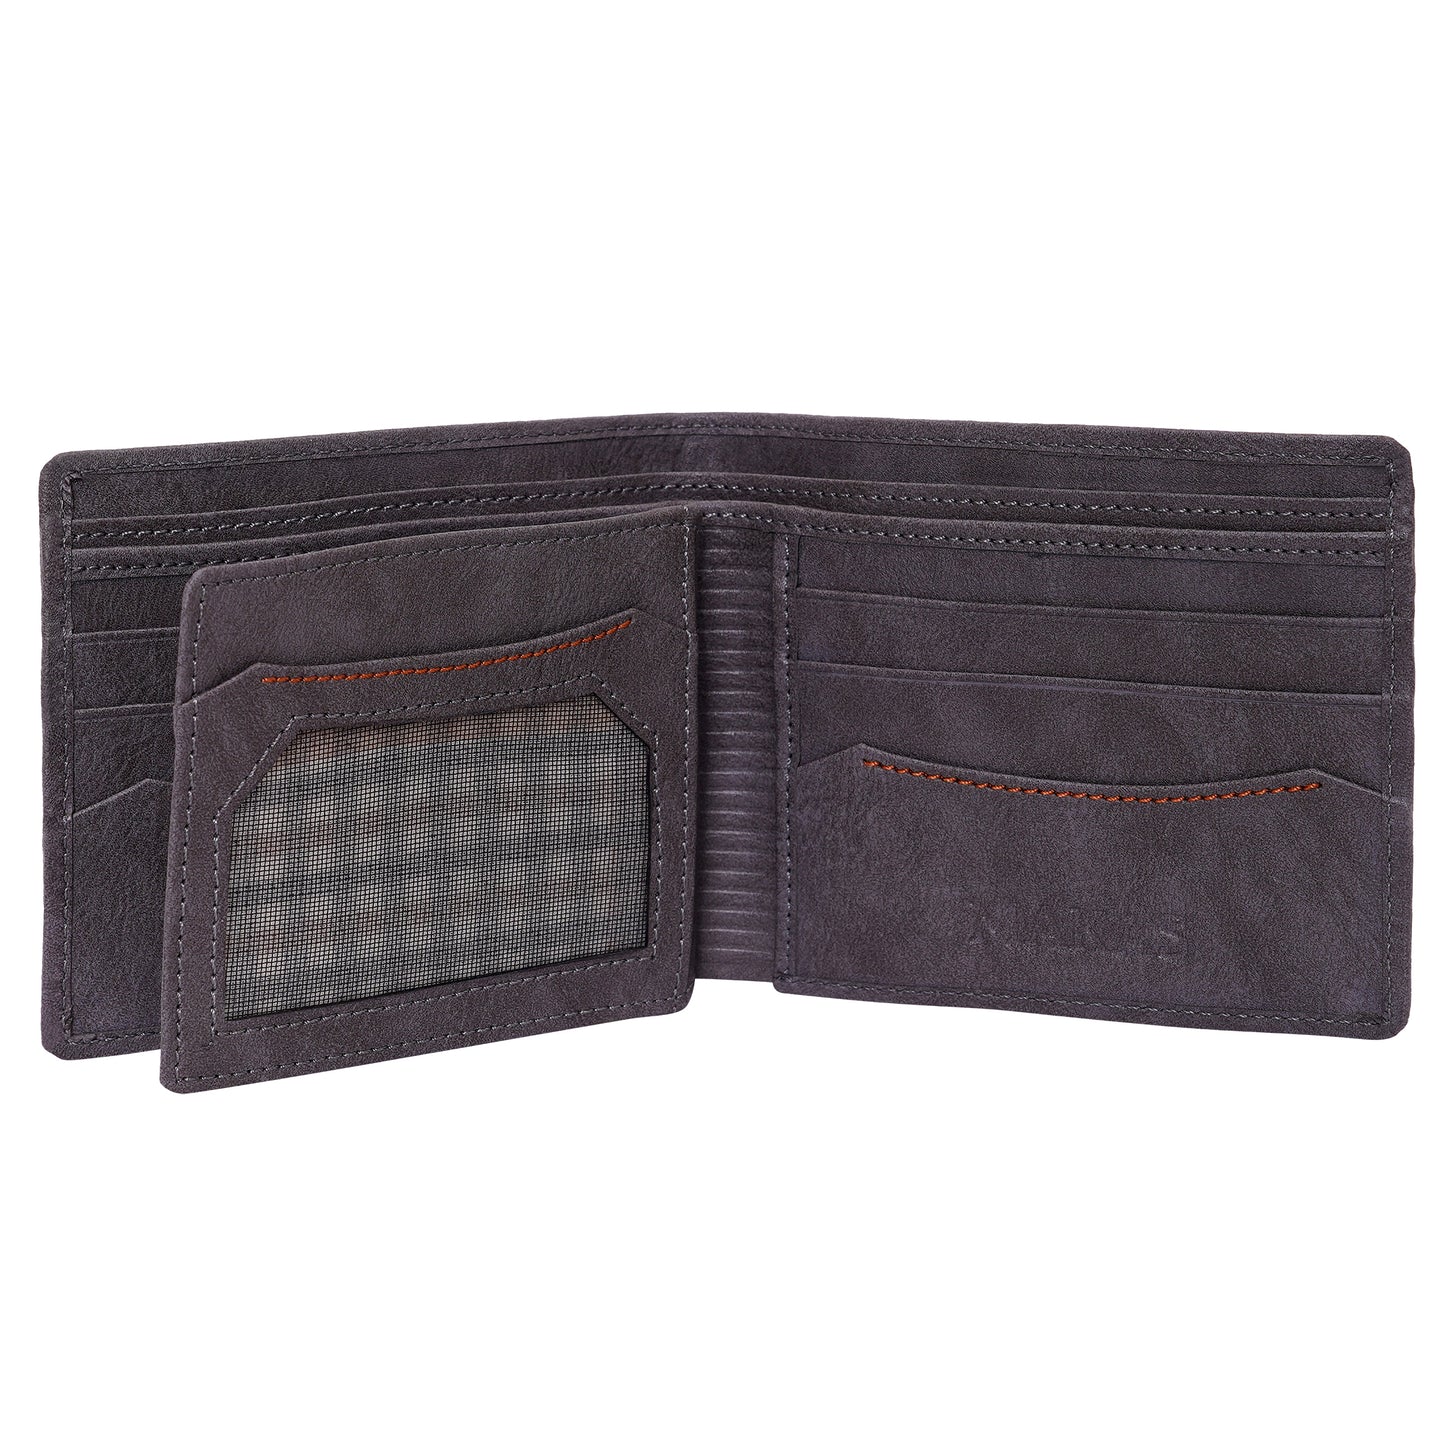 Makas men's wallet , internal look 3,color - Grey